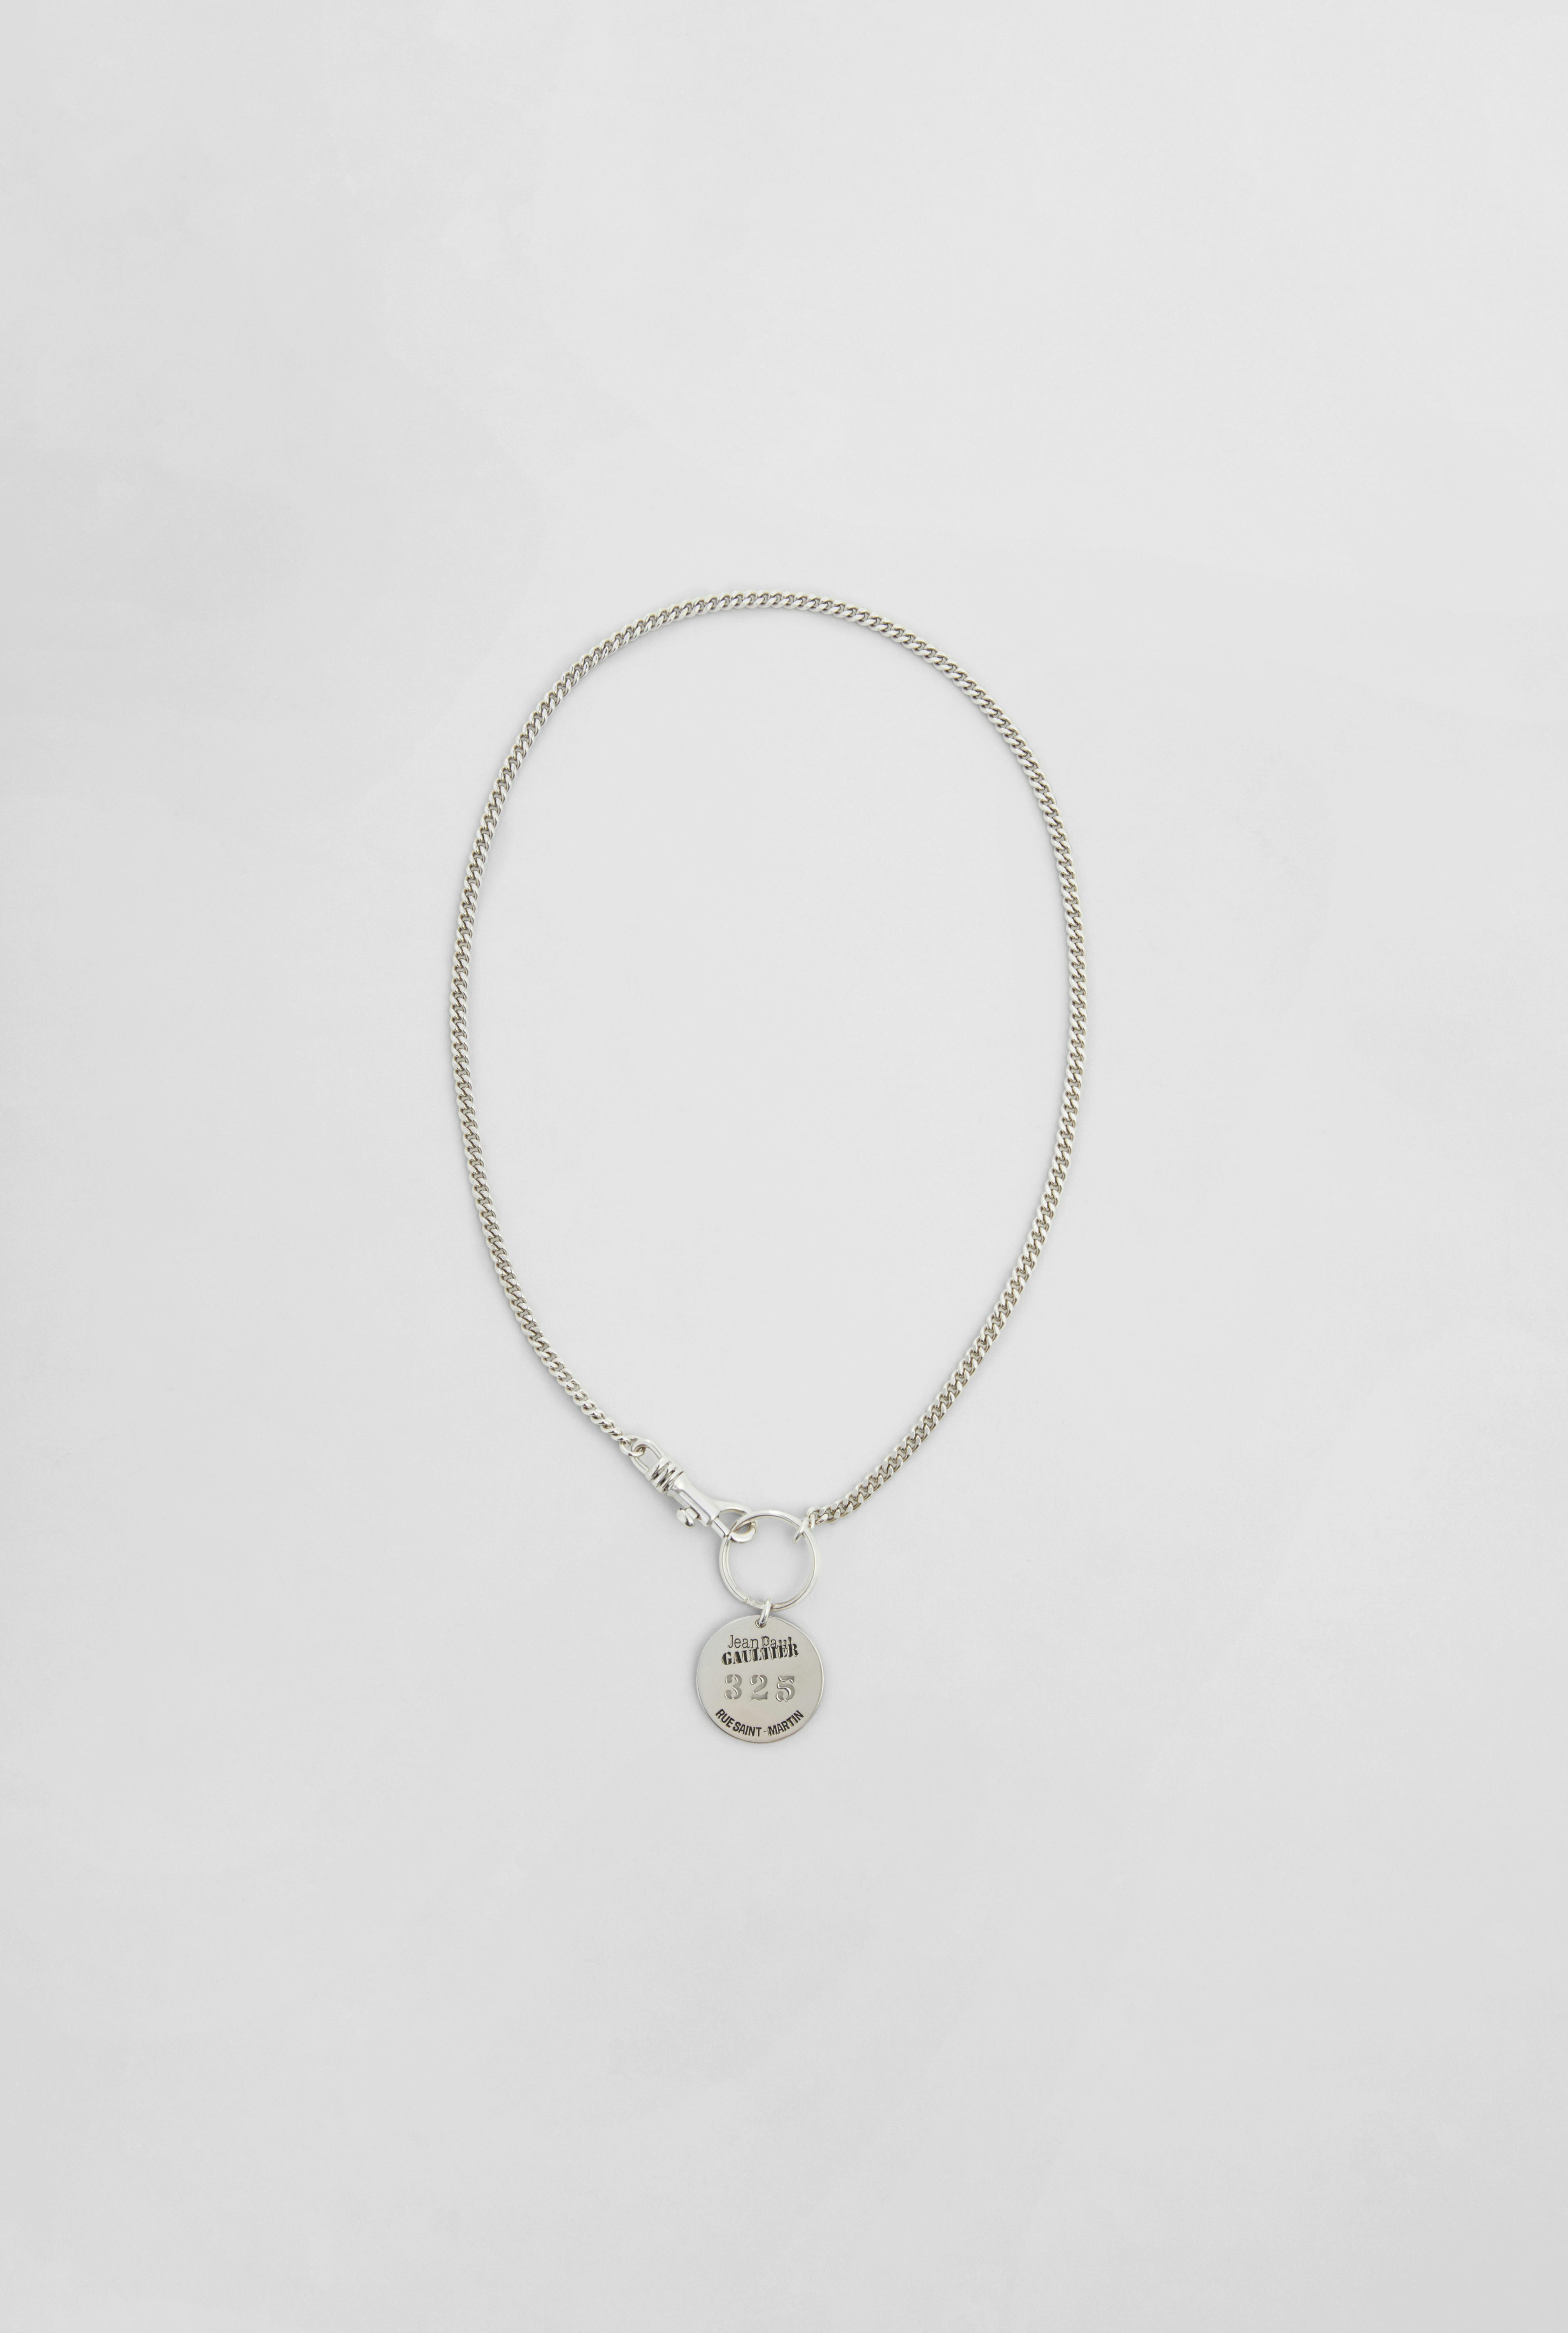 The 325 necklace Jean Paul Gaultier